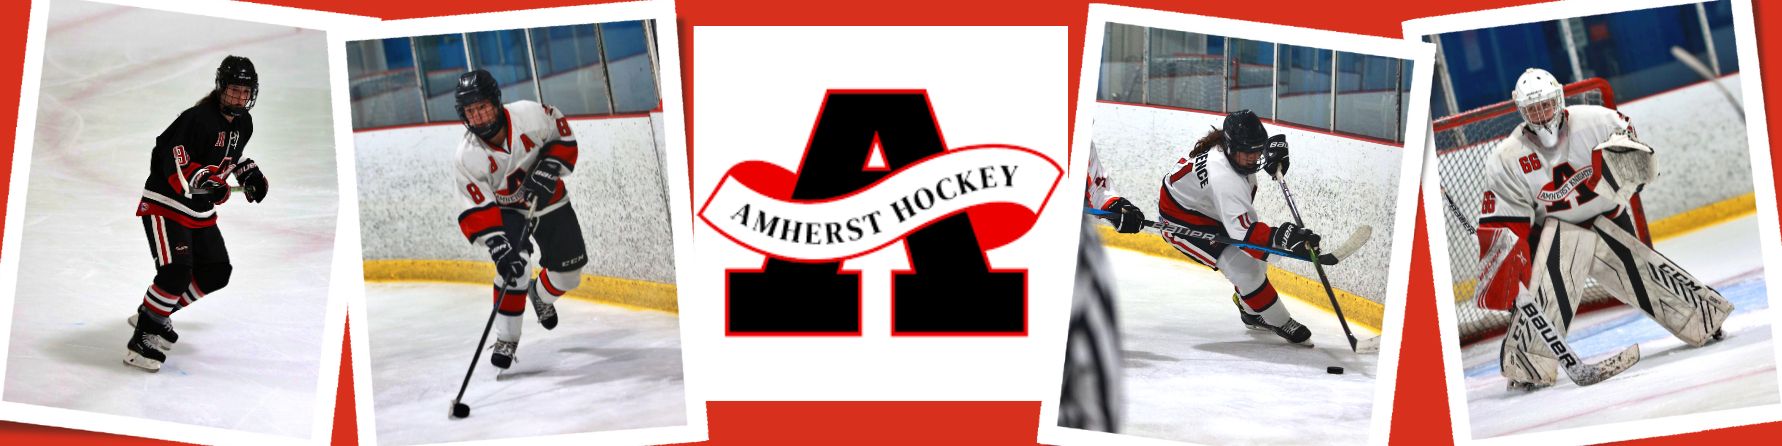 Amherst Youth Hockey